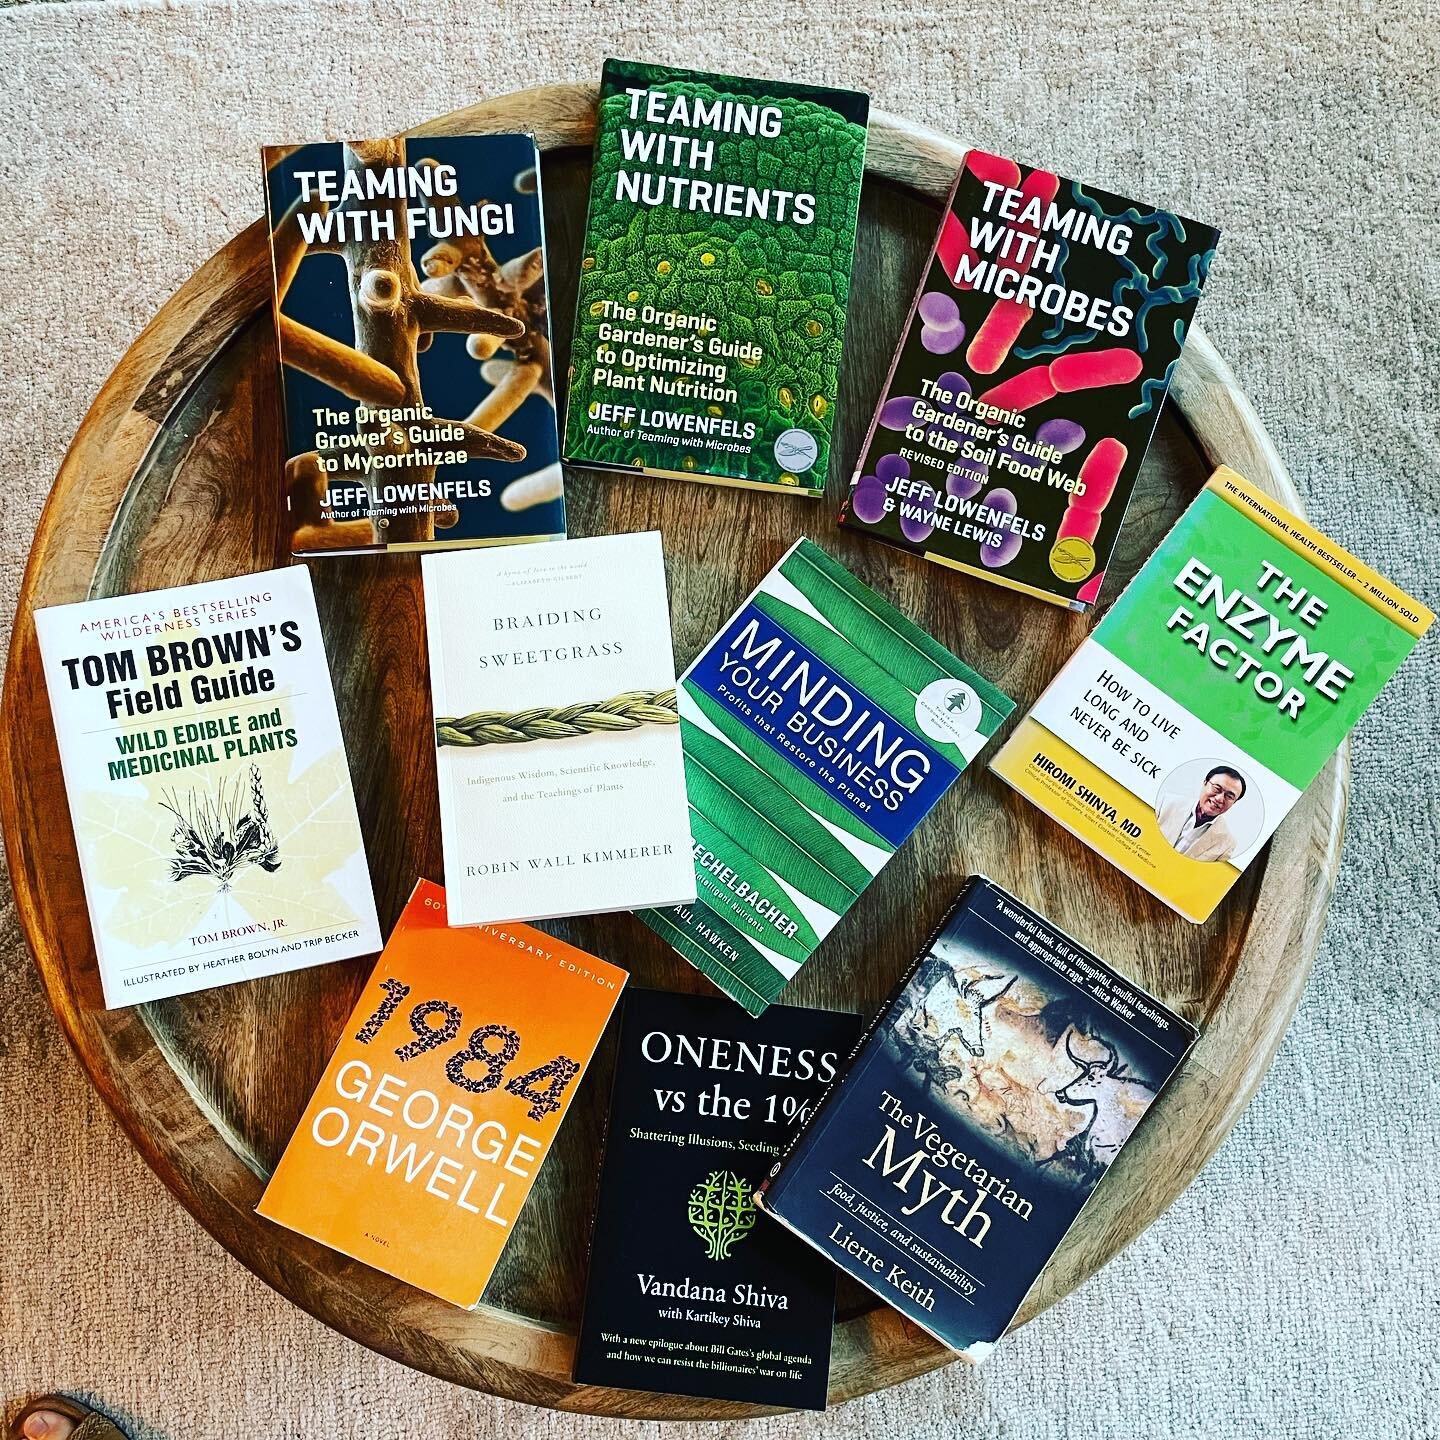 All the goodies!! #bookstagram #booklover #curiosity #educationstation #bookrecommendations #booknerd #readingrainbow #herbs #plantmedicine #herbalmedicine